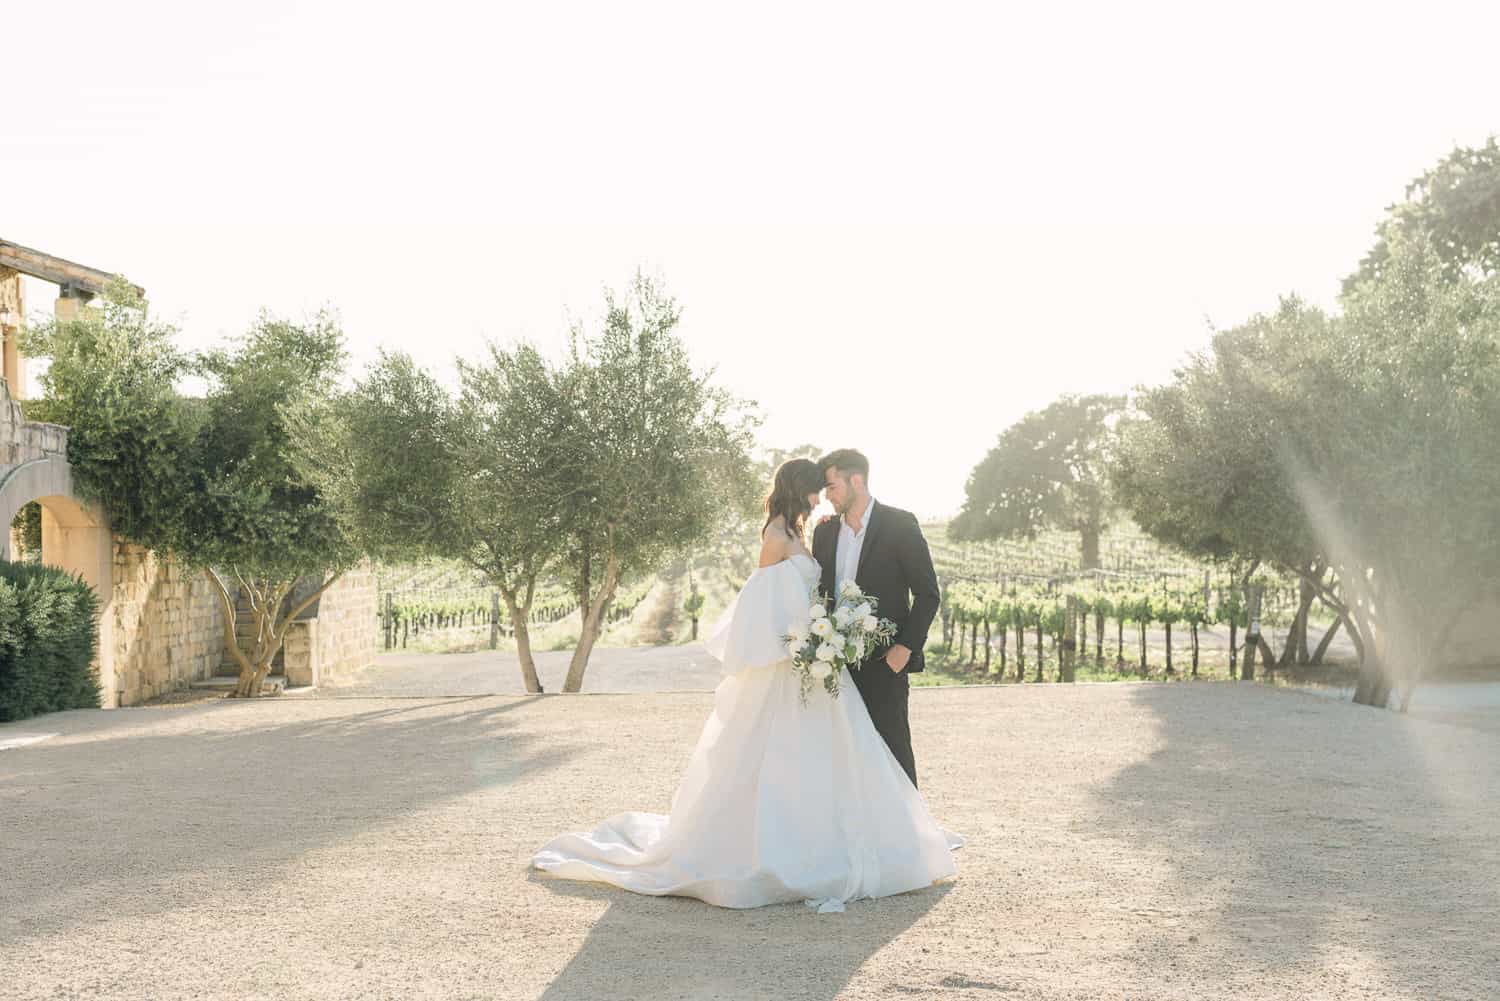 Sunstone Winery Wedding, Sunstone Winery, Southern California Wedding Photographer, Theresa Kelly Photography